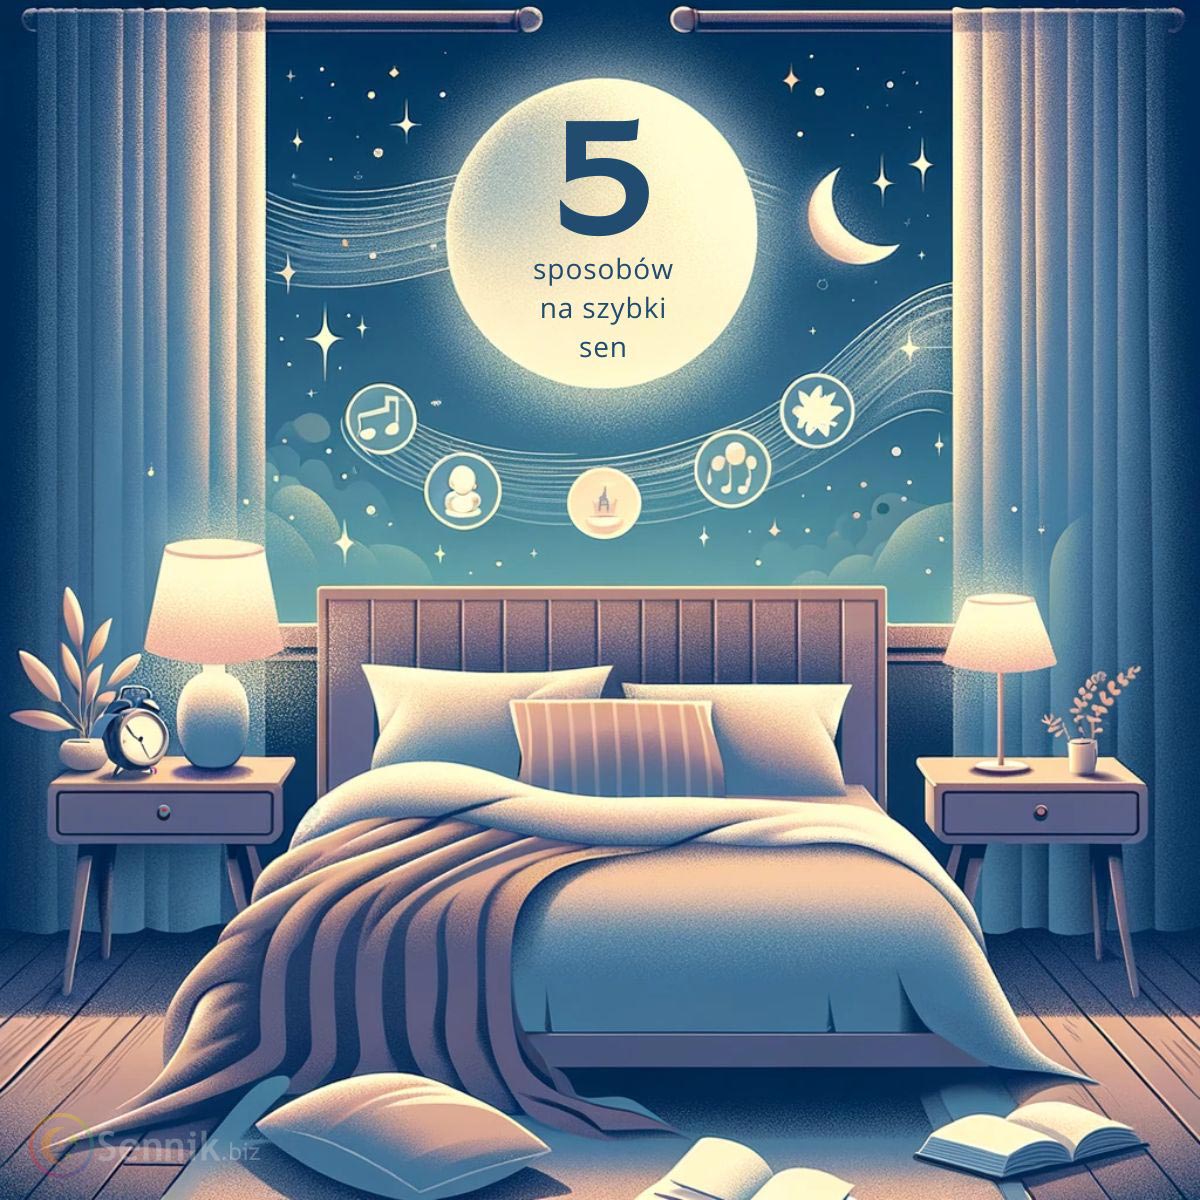 5 sposobów na szybki sen